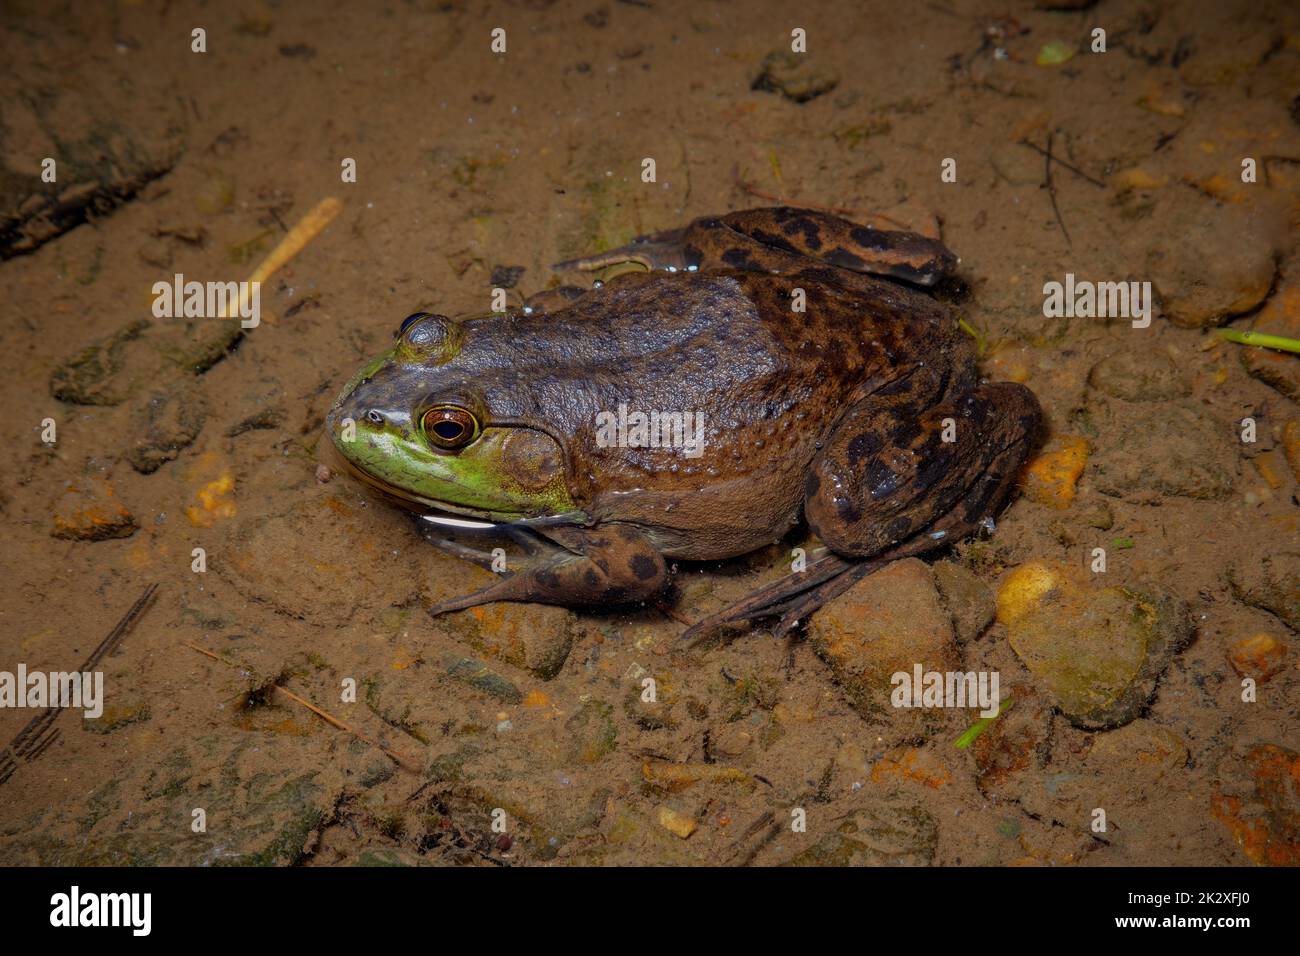 big frog in lake bullfrog water amphibian wildlife animal pond environment Stock Photo